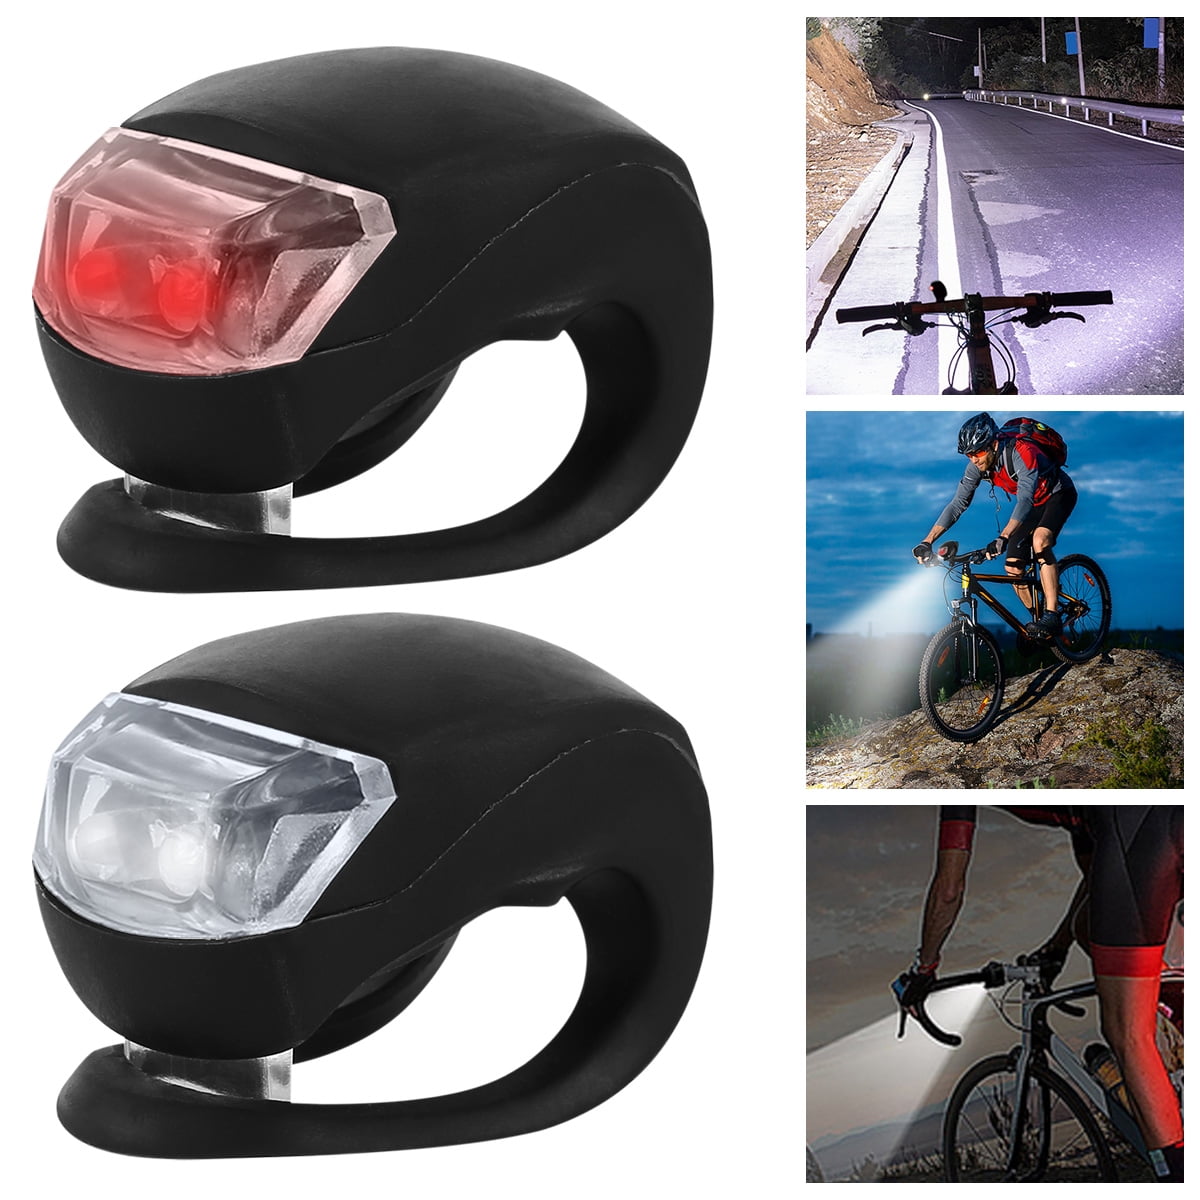 Front lamp spotlight TAILLIGHTS LIGHTS for Bicycle MTB bike city bike bracket